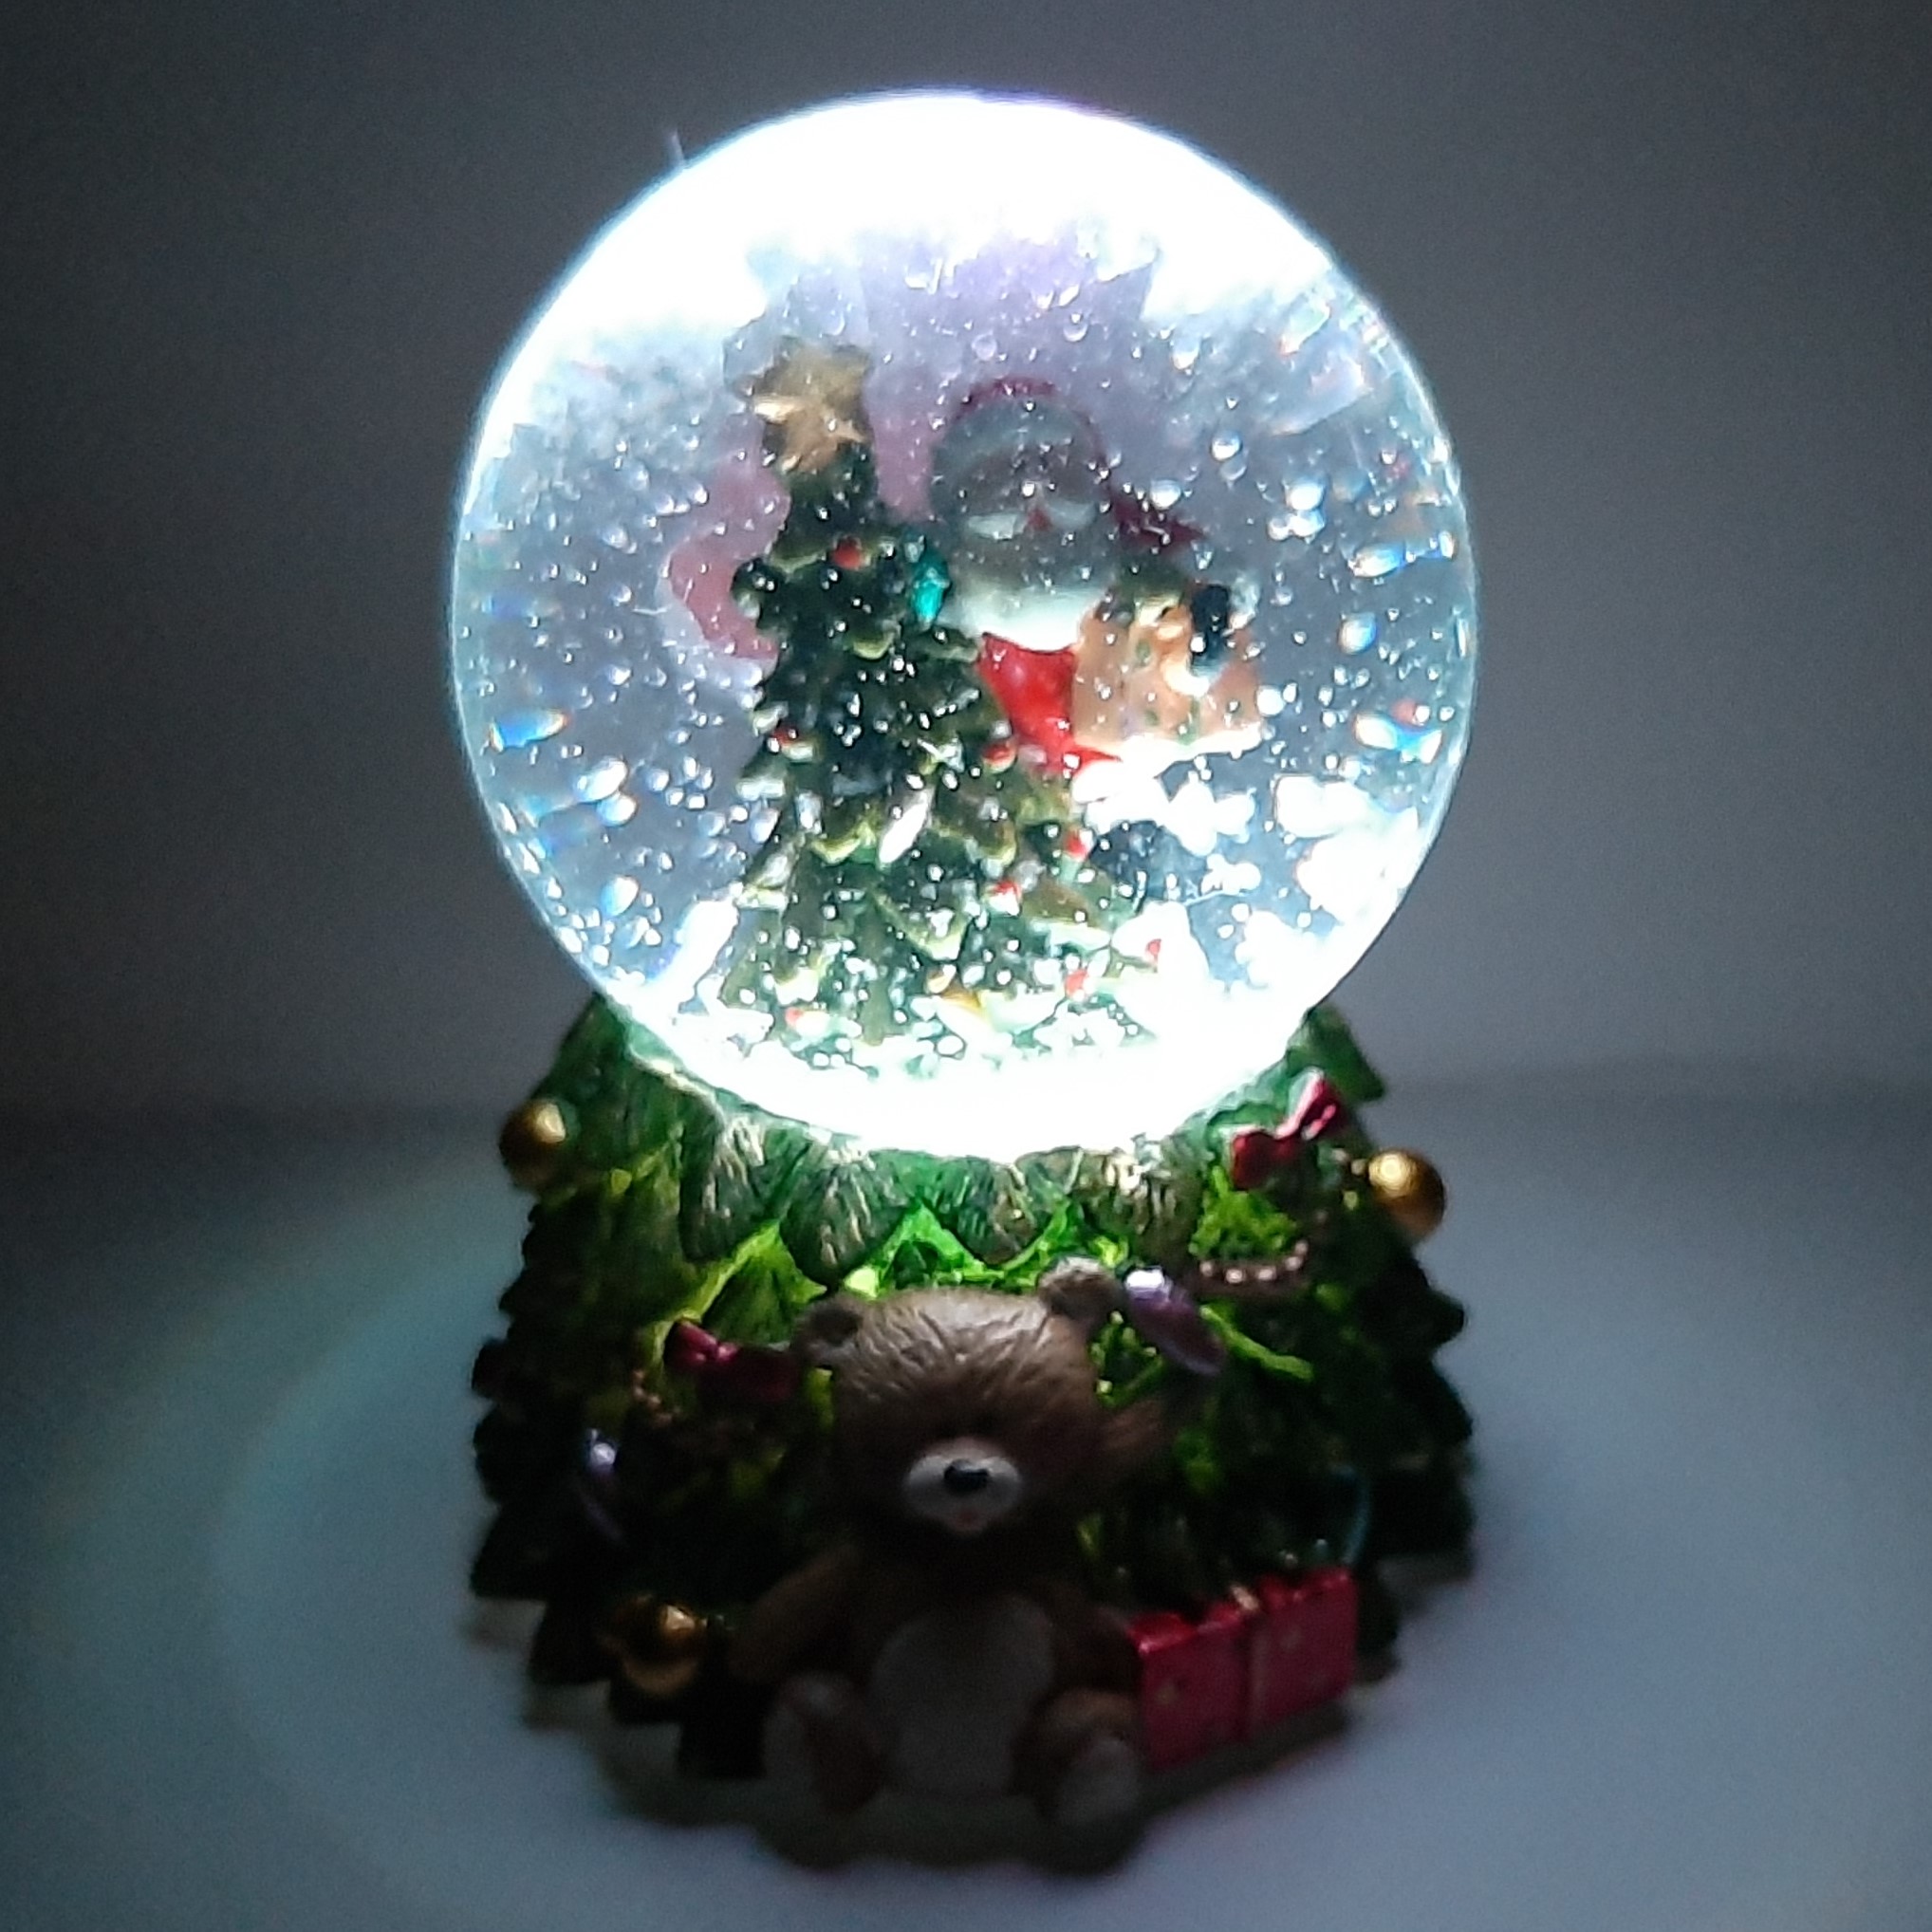 Geen Verkeerd tentoonstelling Sneeuwbol kerstboom met kerstman met led verlichting 8cm hoog